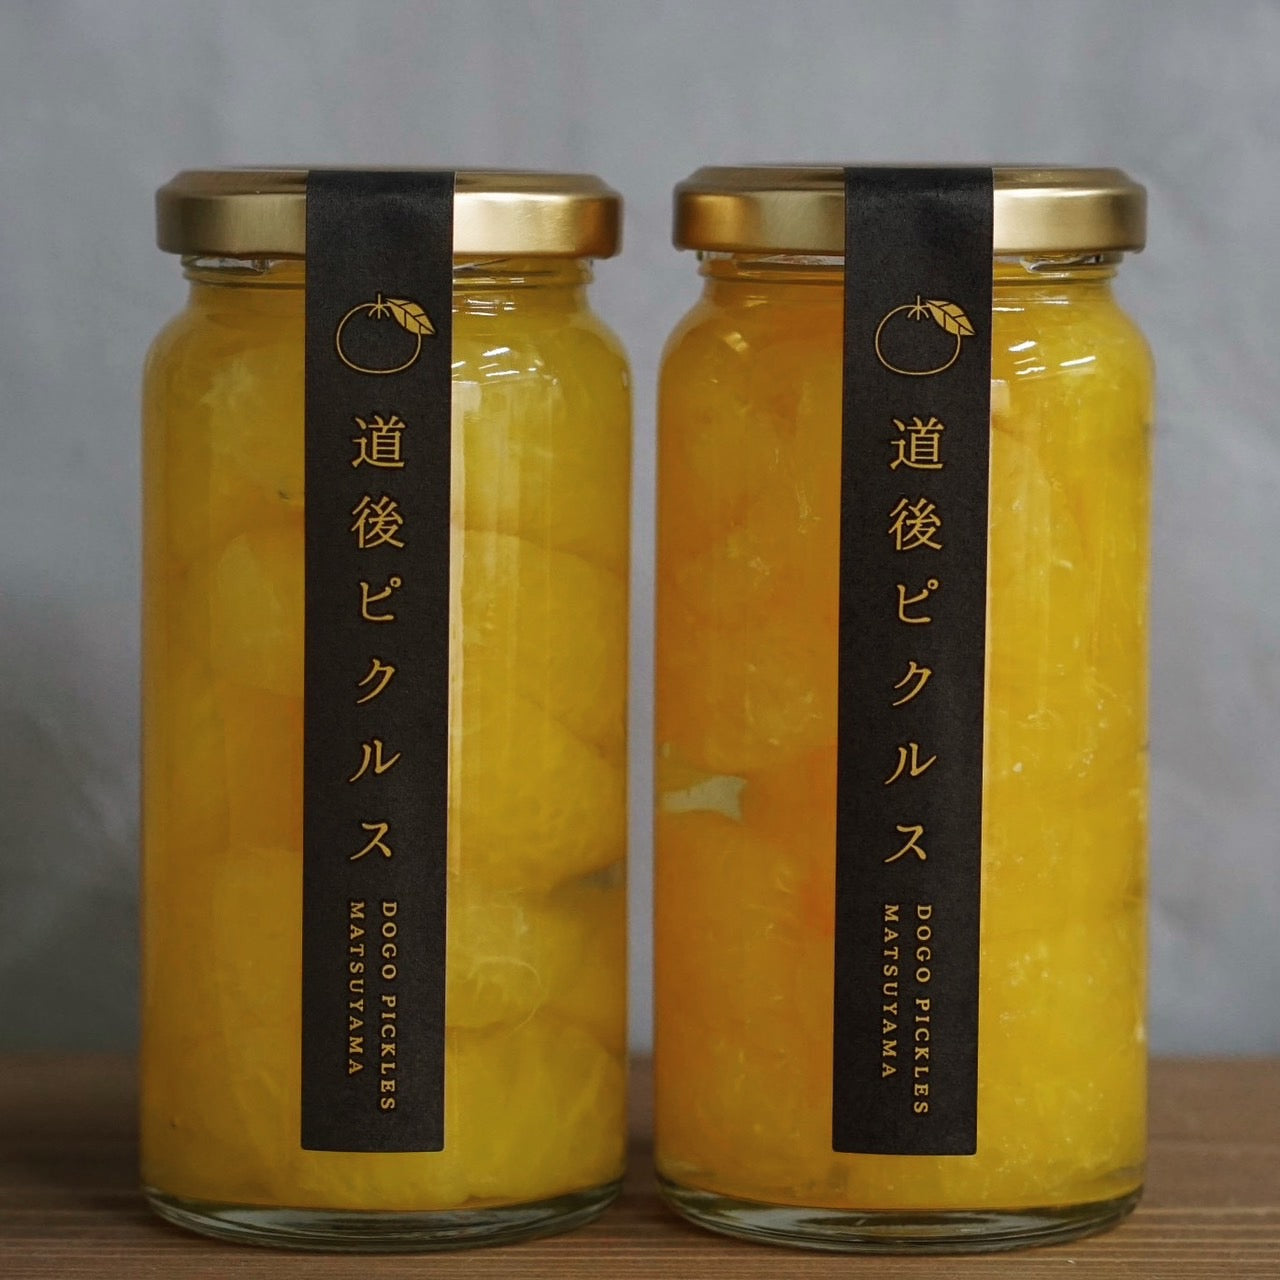 sweet potato and kawachi-bankan